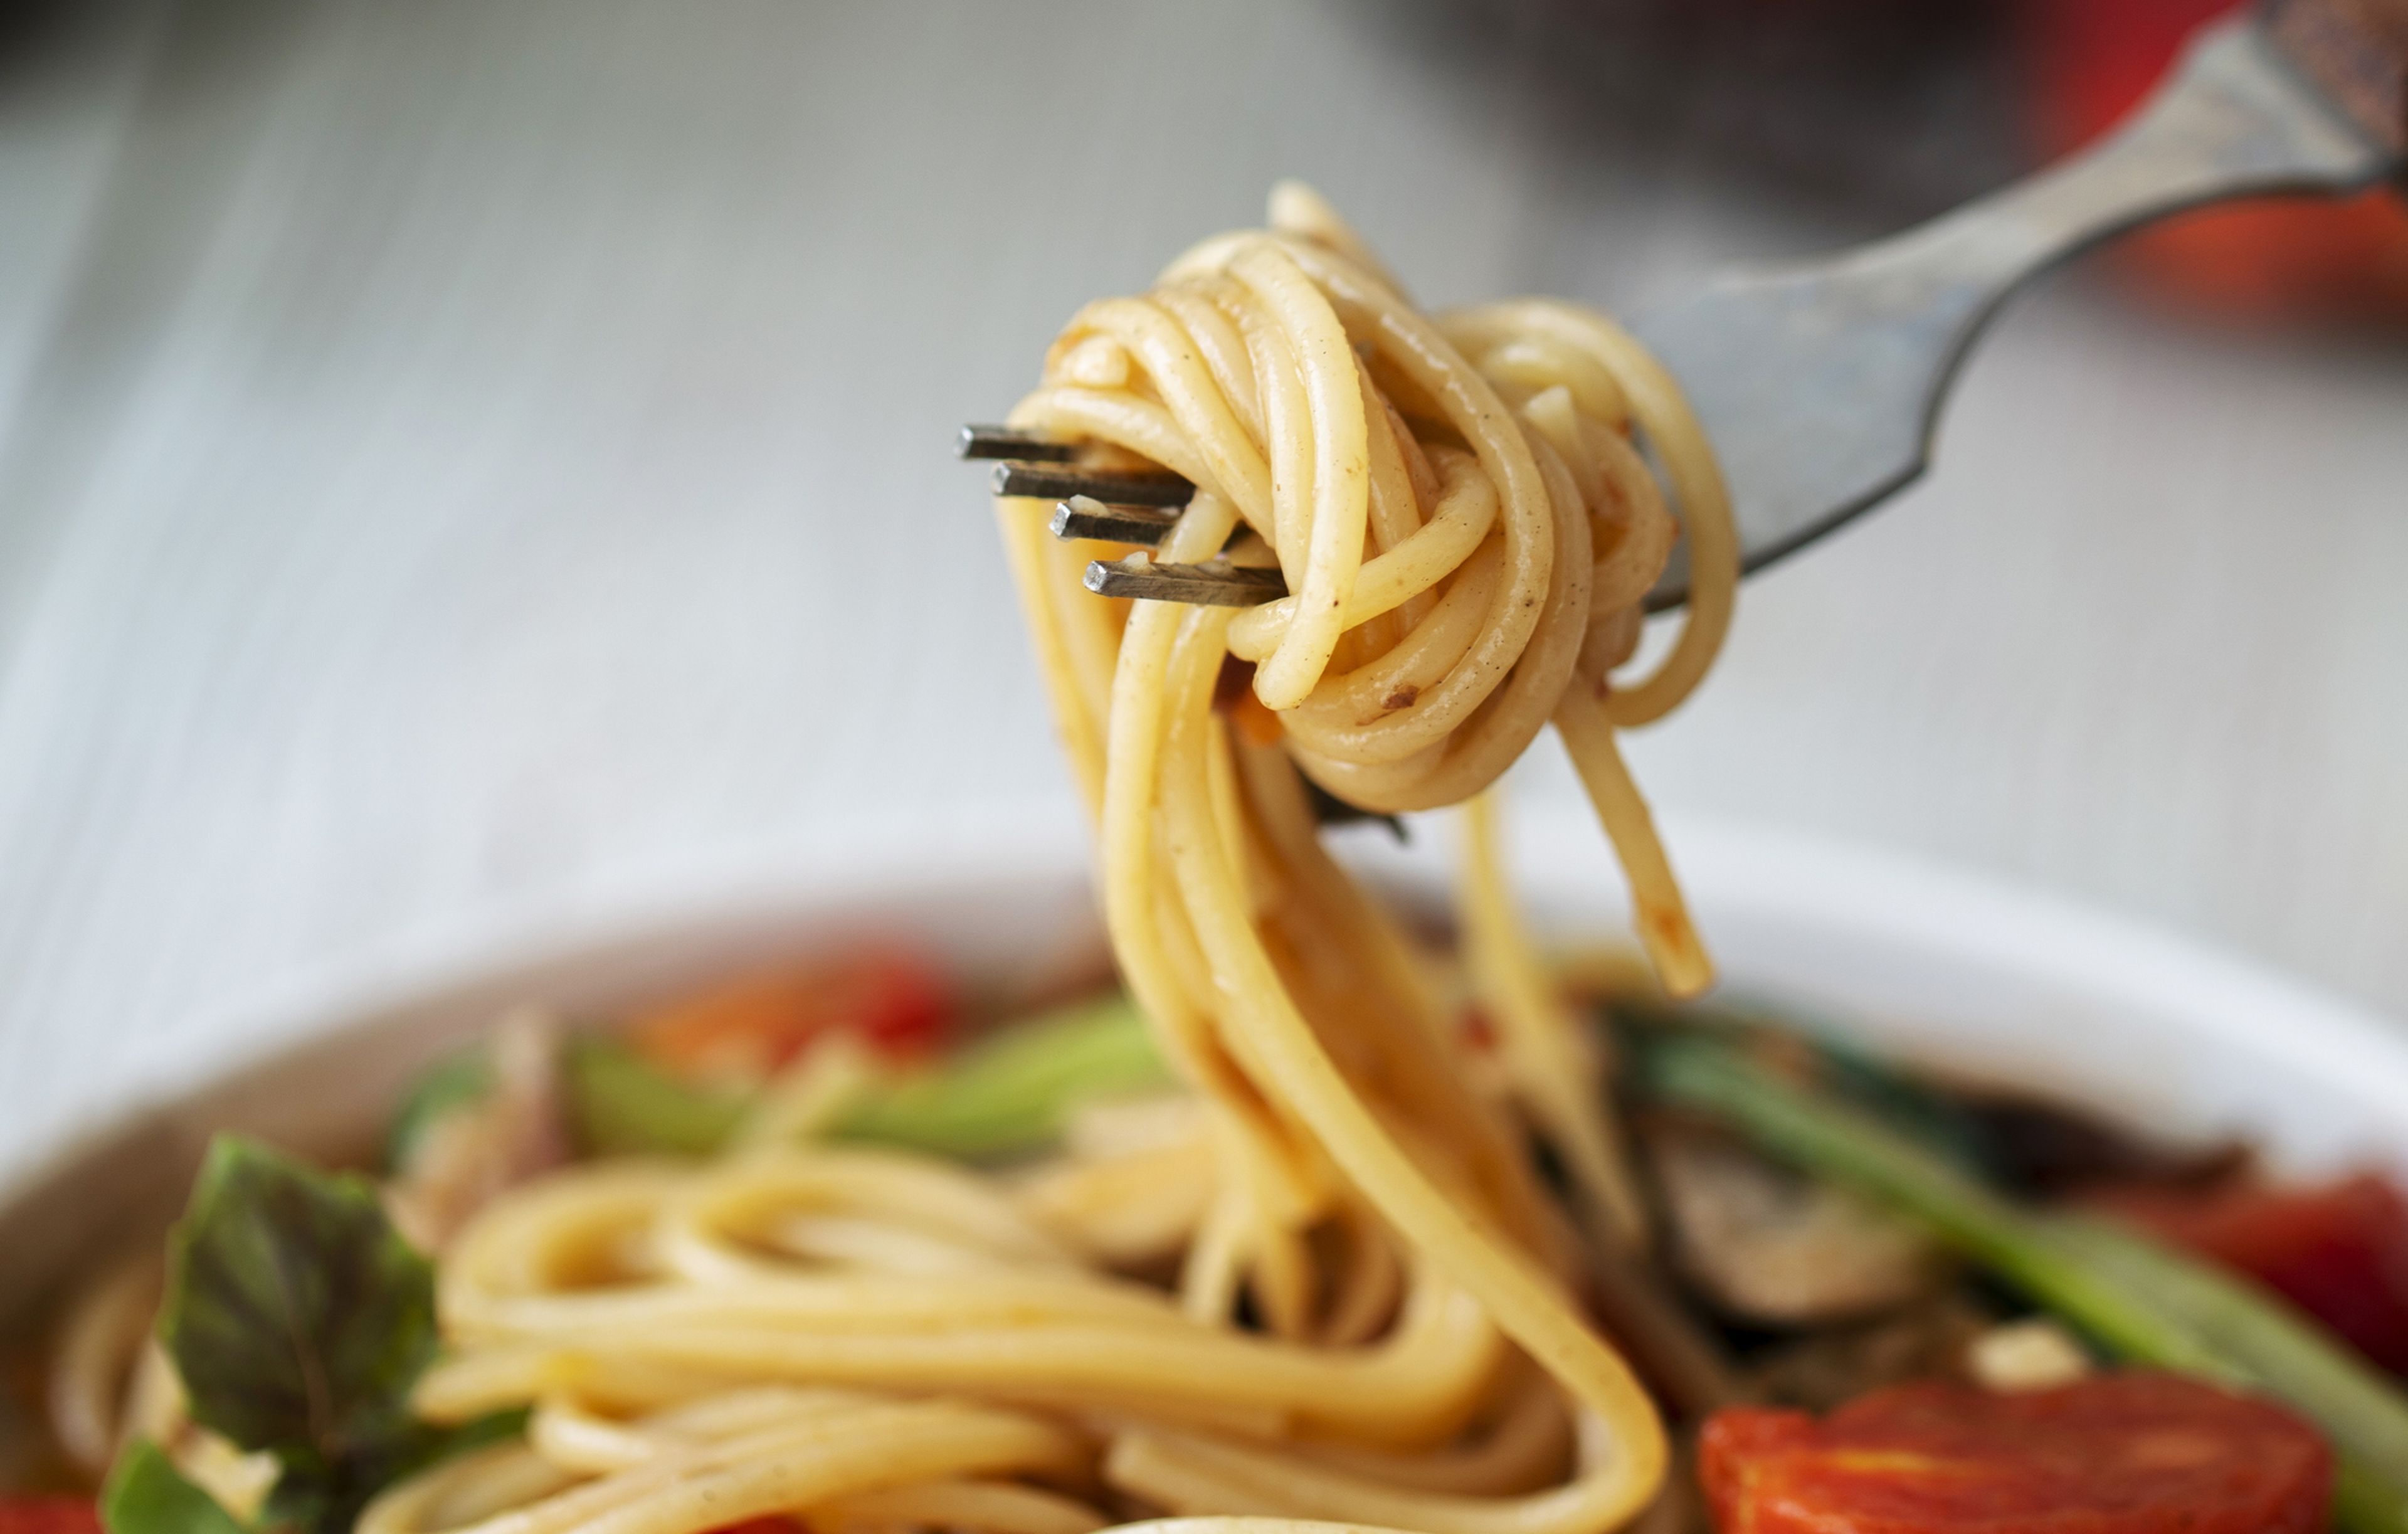 espaguetis